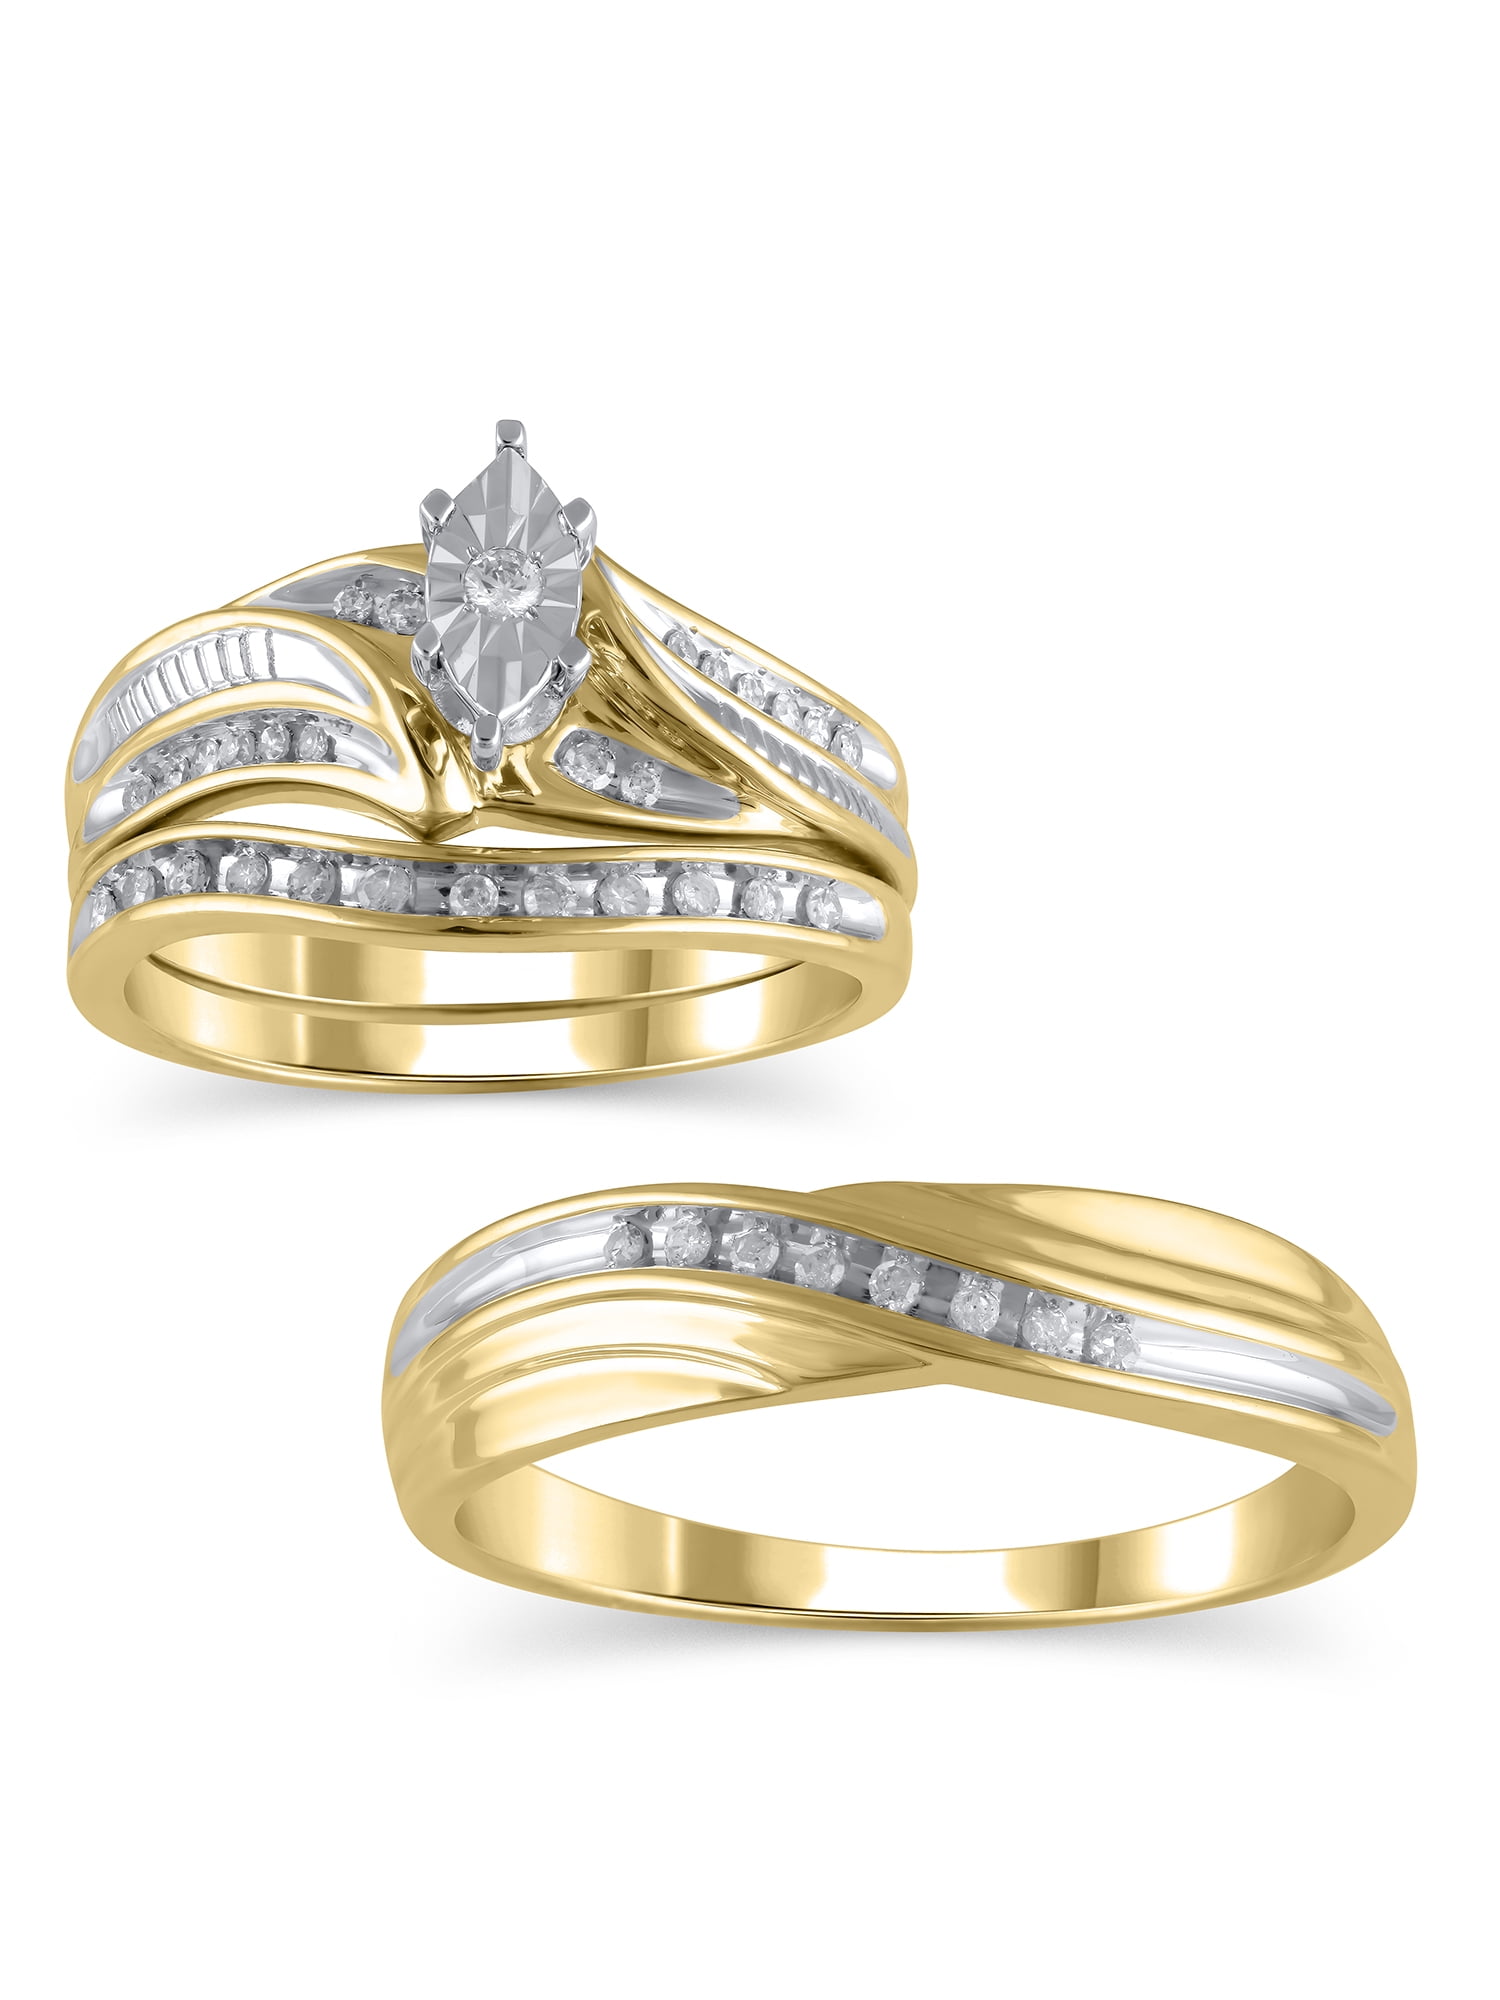 Princess Cut Aquamarine Yellow Gold Filled Ring Set Wedding Engagement Band SZ 7